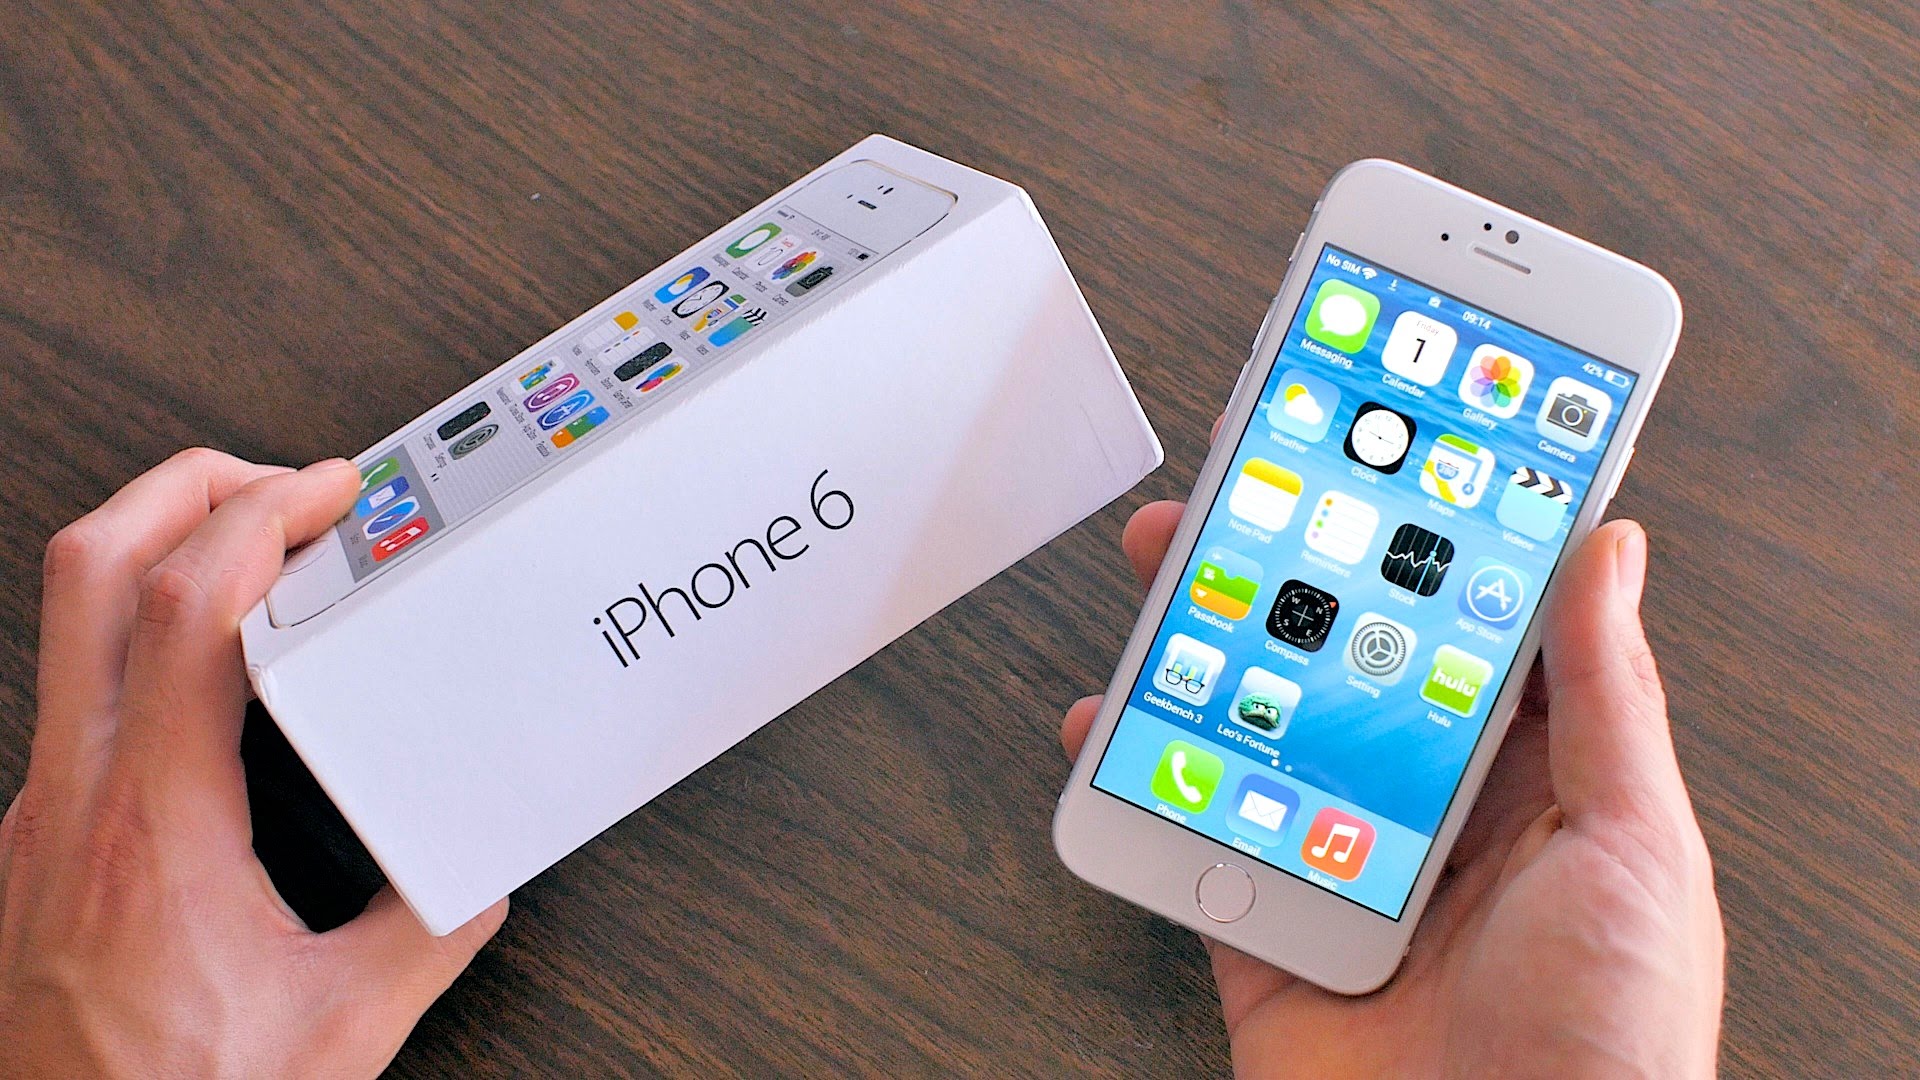 Puno court son iPhone 6 mai ieftin cu 500 lei la eMAG [OKAZIE] - SmartReview